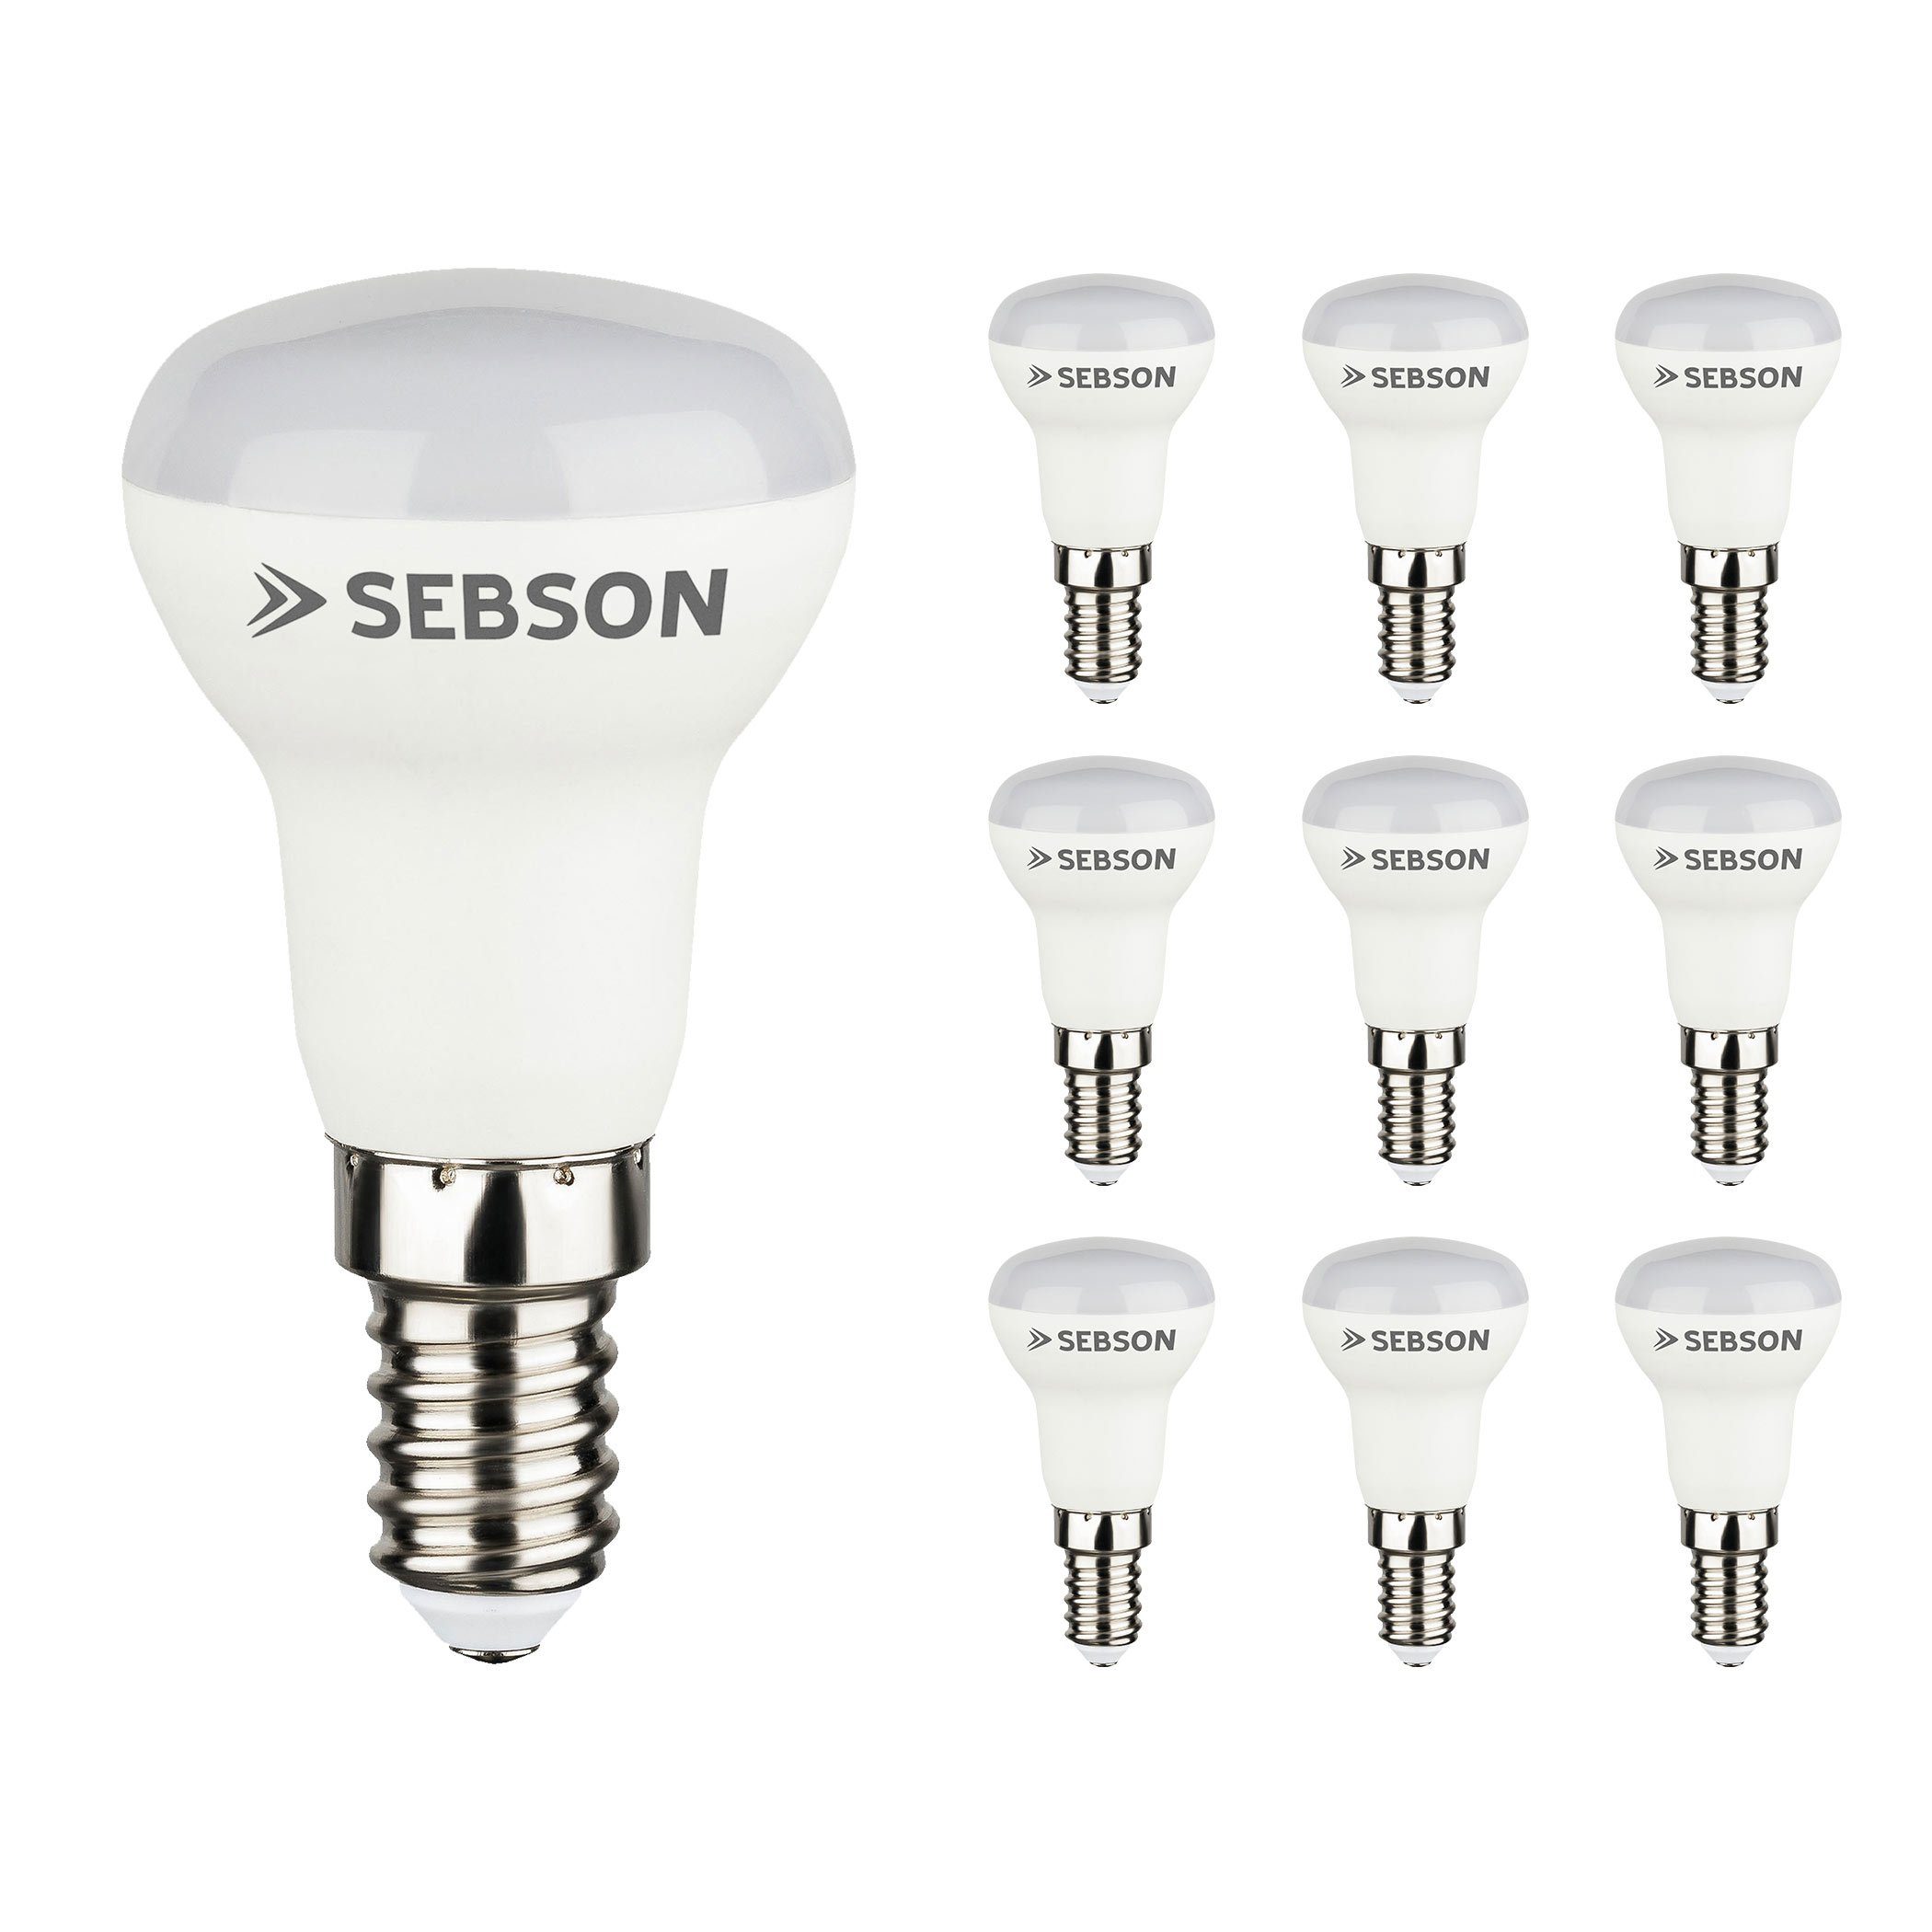 SEBSON »LED Lampe E14 R39 Reflektor 3W warmweiß 3000k 200lm, Ra97, 230V LED  Leuchtmittel flimmerfrei, E14 R39 Reflektorlampe, 10er Pack« LED- Leuchtmittel online kaufen | OTTO